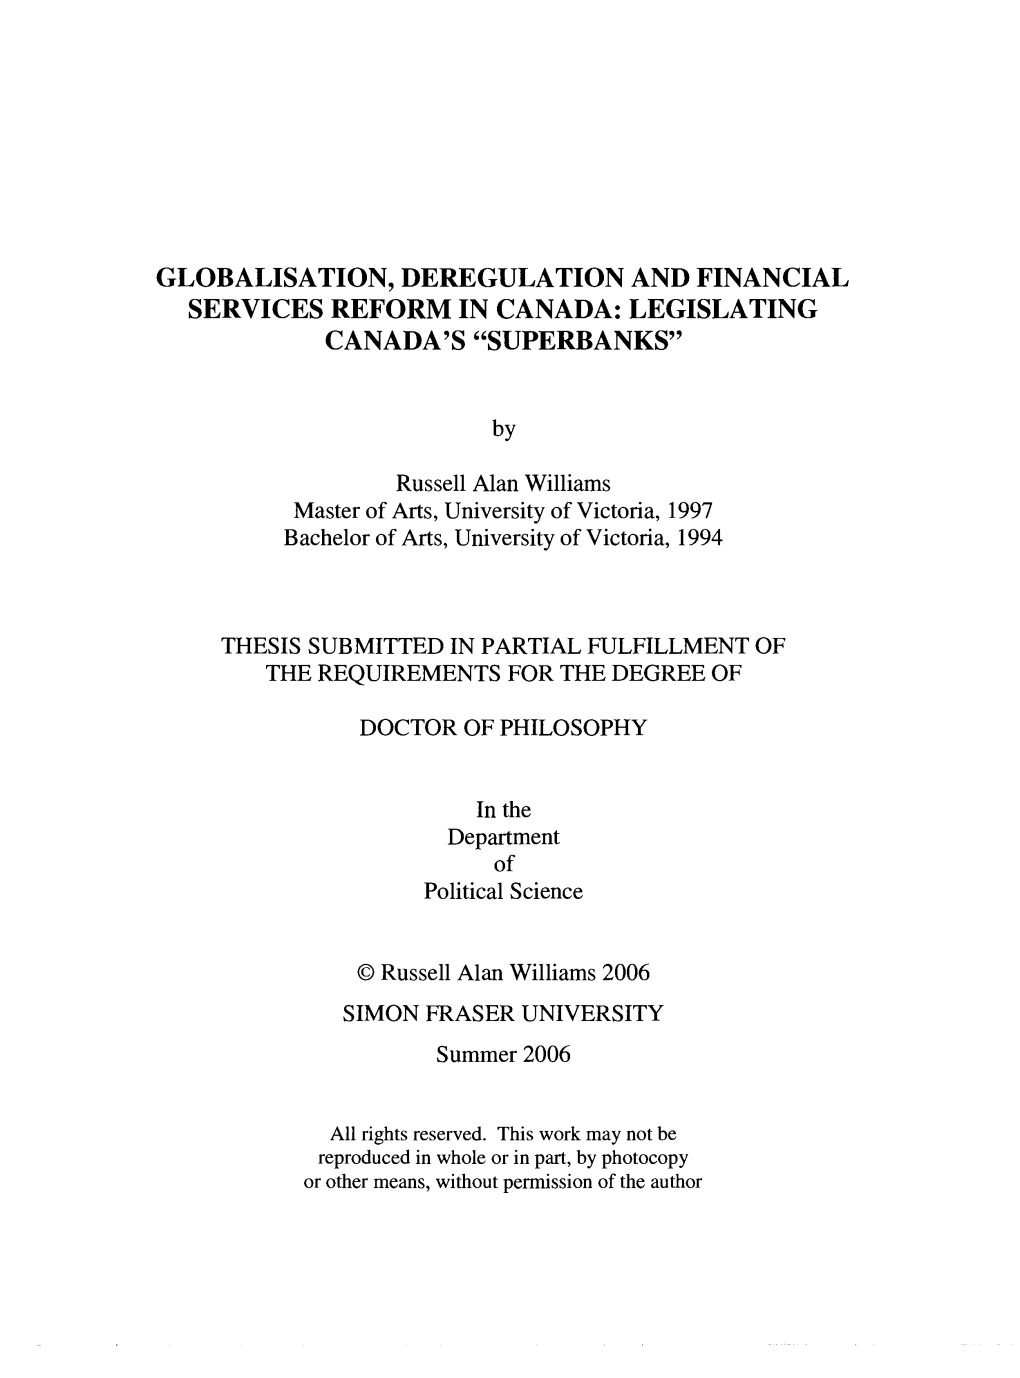 Globalisation, Deregulation and Financial Services Reform in Canada: Legislating Canada's "Superbanks"